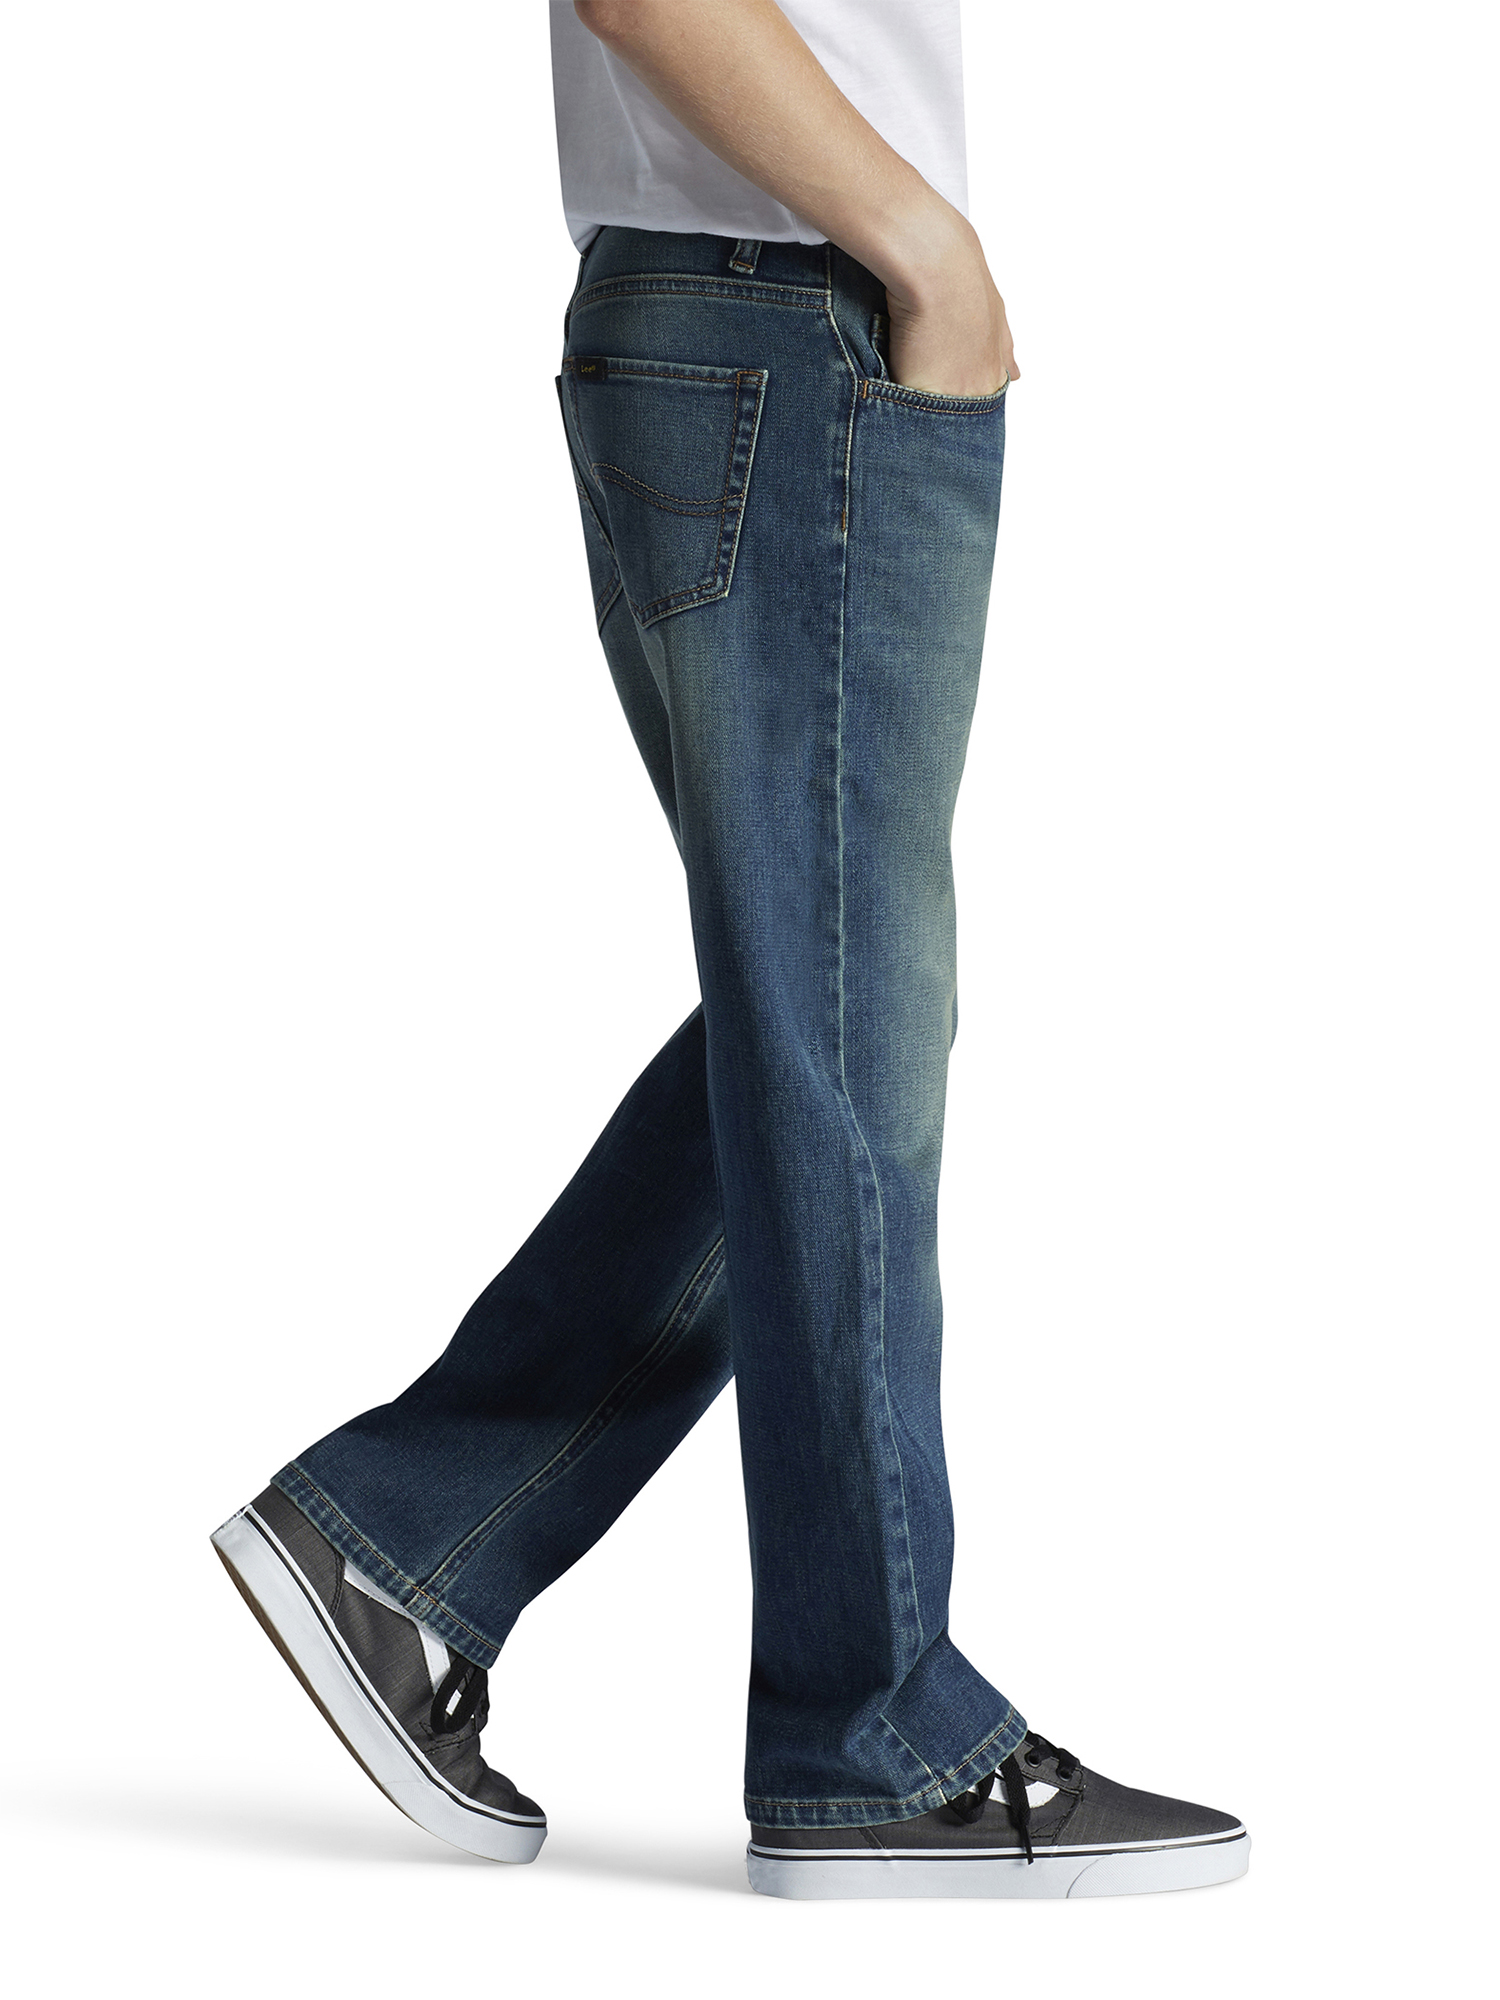 Lee Boys Sport Xtreme Straight Leg Jeans, Sizes 8-18 & Husky - image 2 of 3